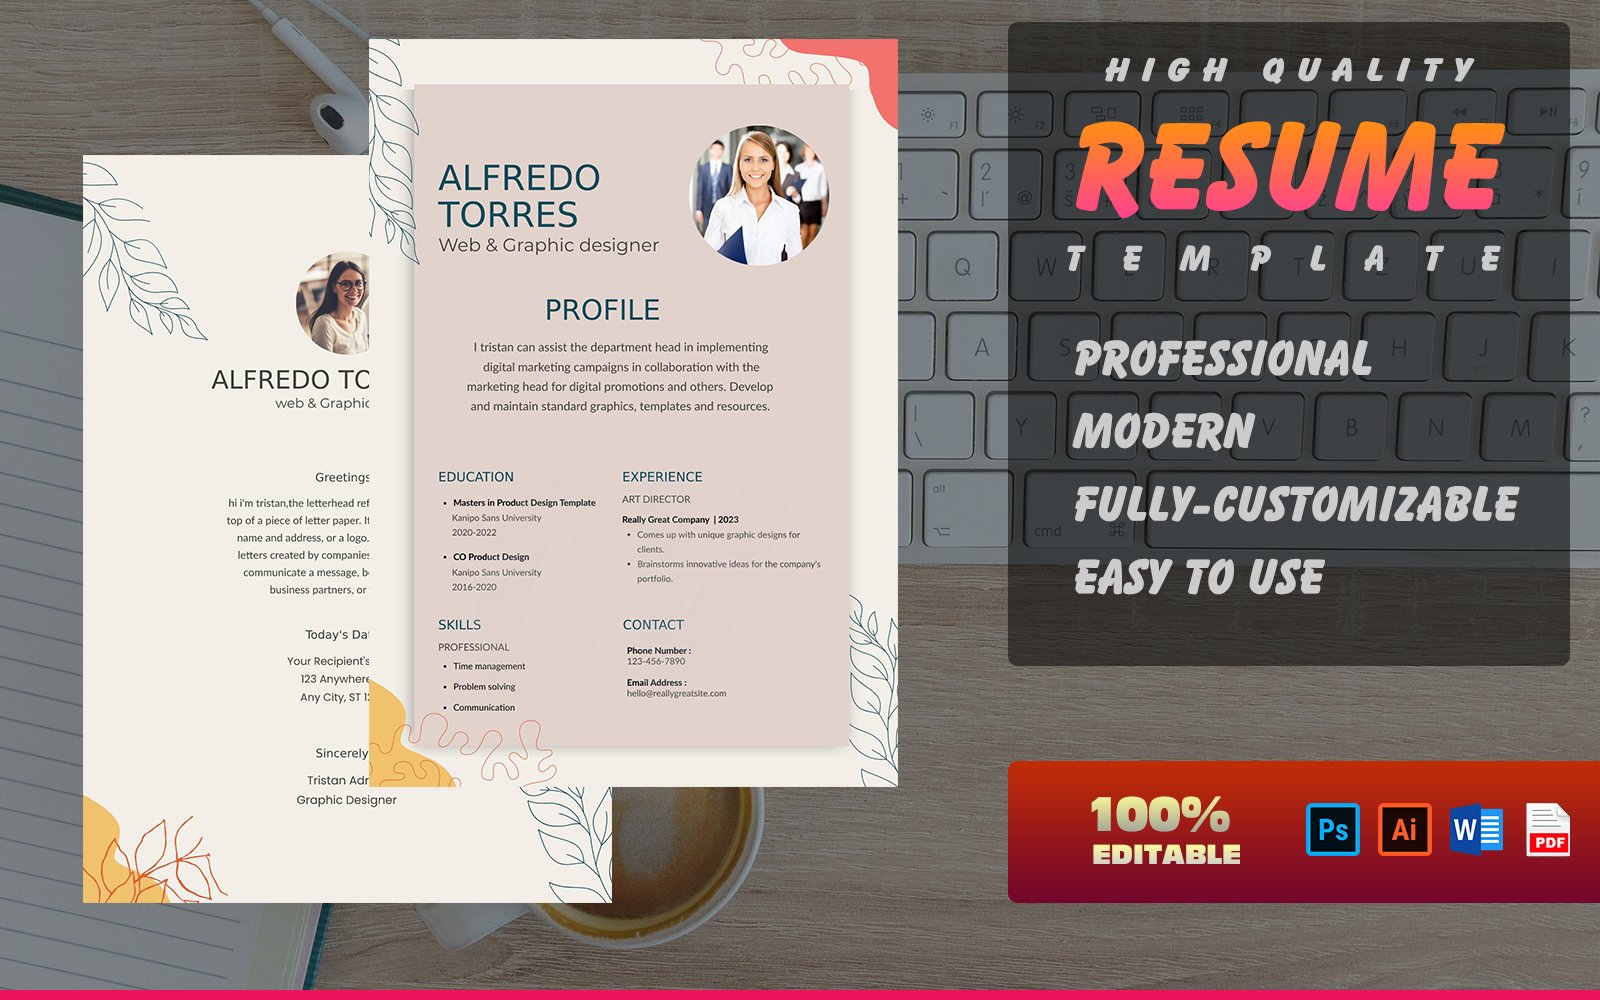 Resume / CV | Professional | Modern | High quality | 100% Editable 4